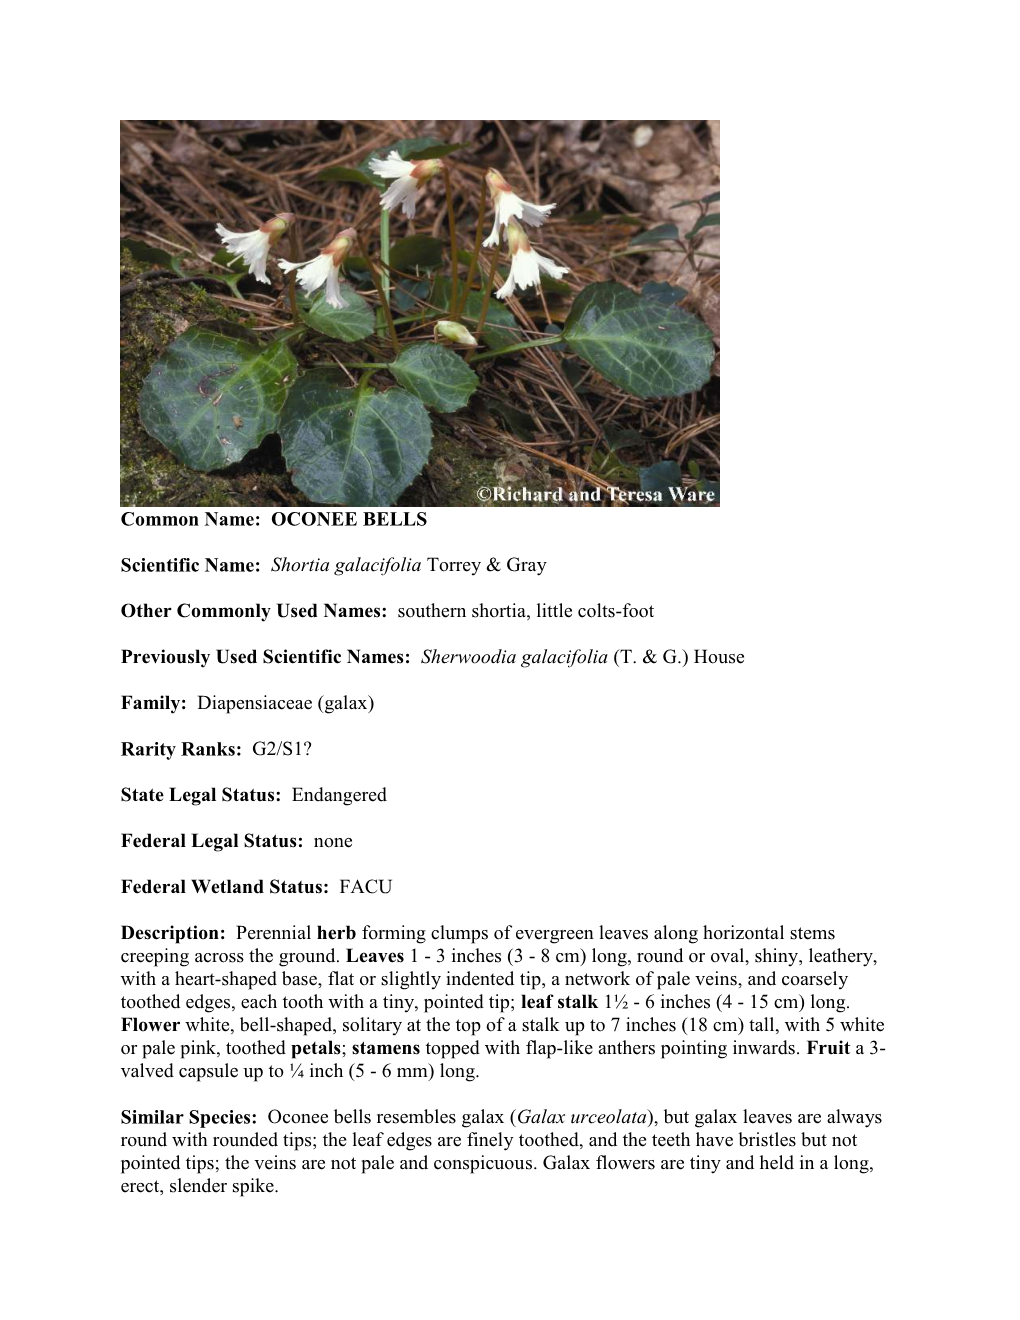 OCONEE BELLS Scientific Name: Shortia Galacifolia Torrey & Gray